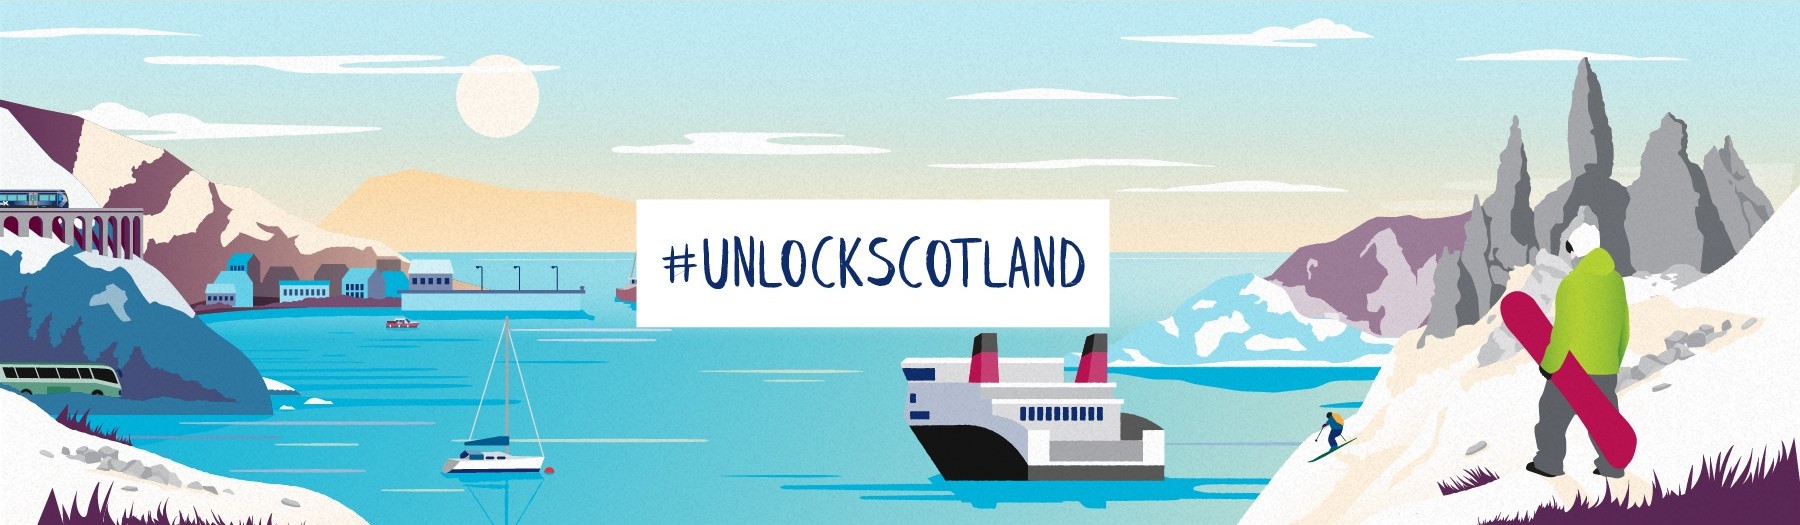 Spirit of Scotland winter illustration #unlockscotland